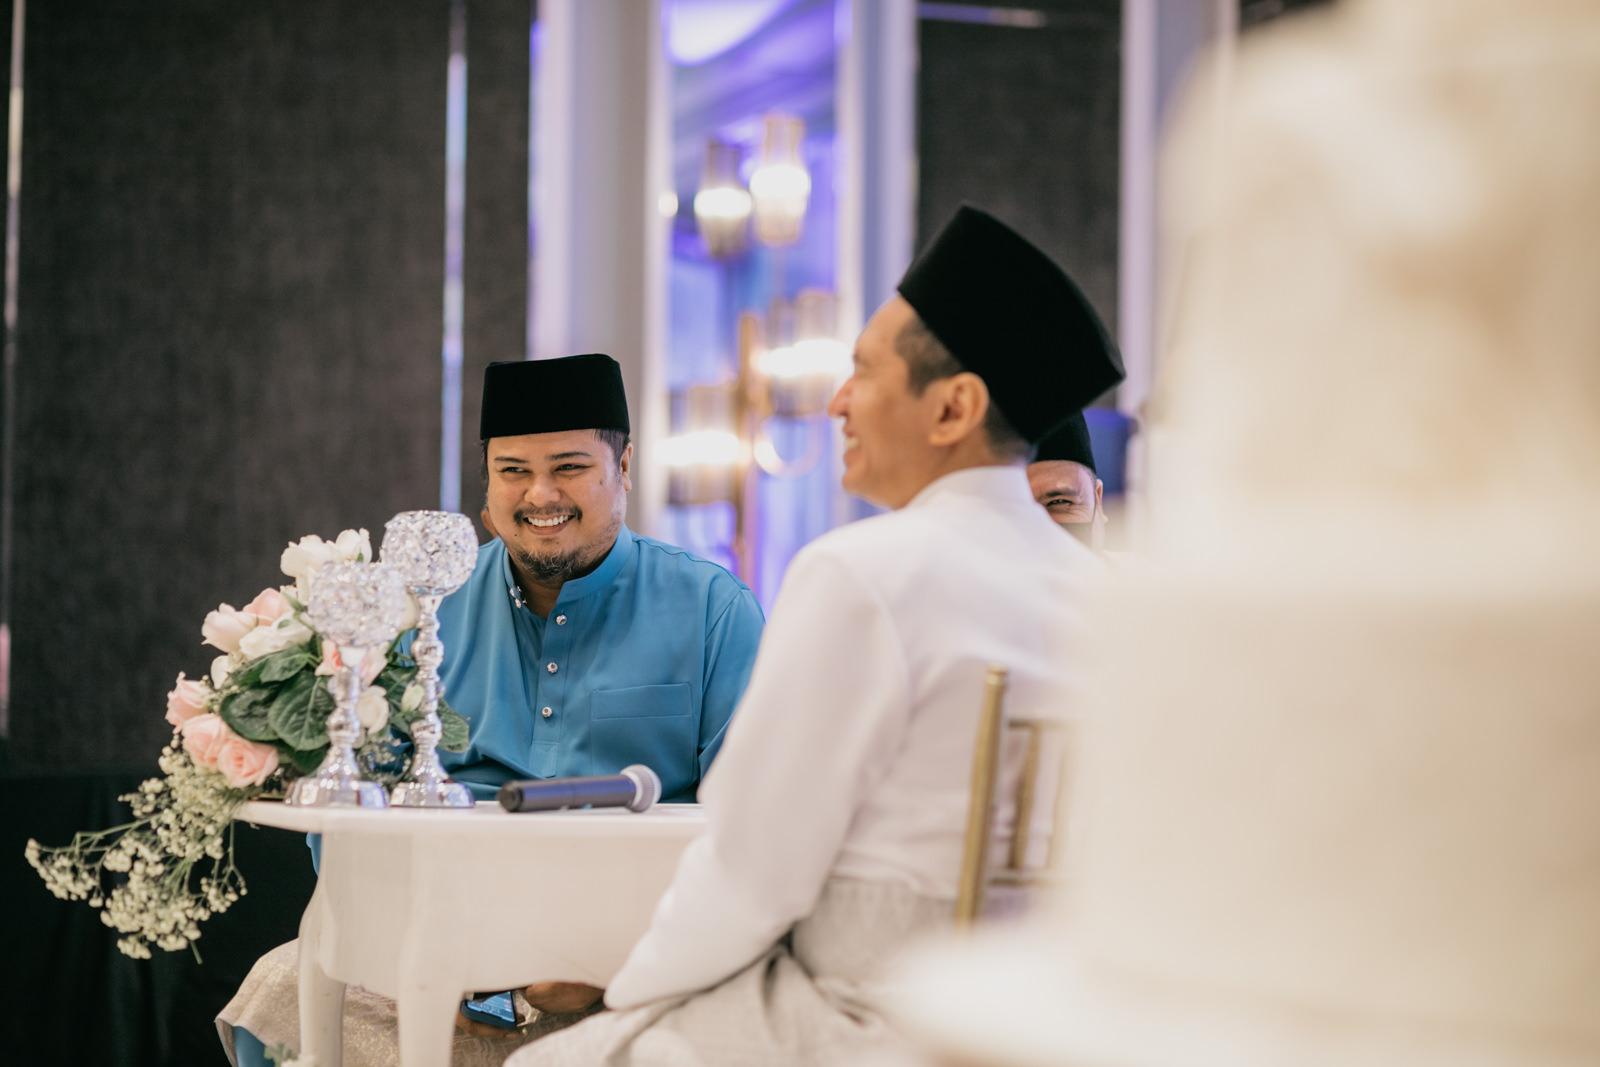 Laughters during Akad Nikah at JW Marriott Kuala Lumpur